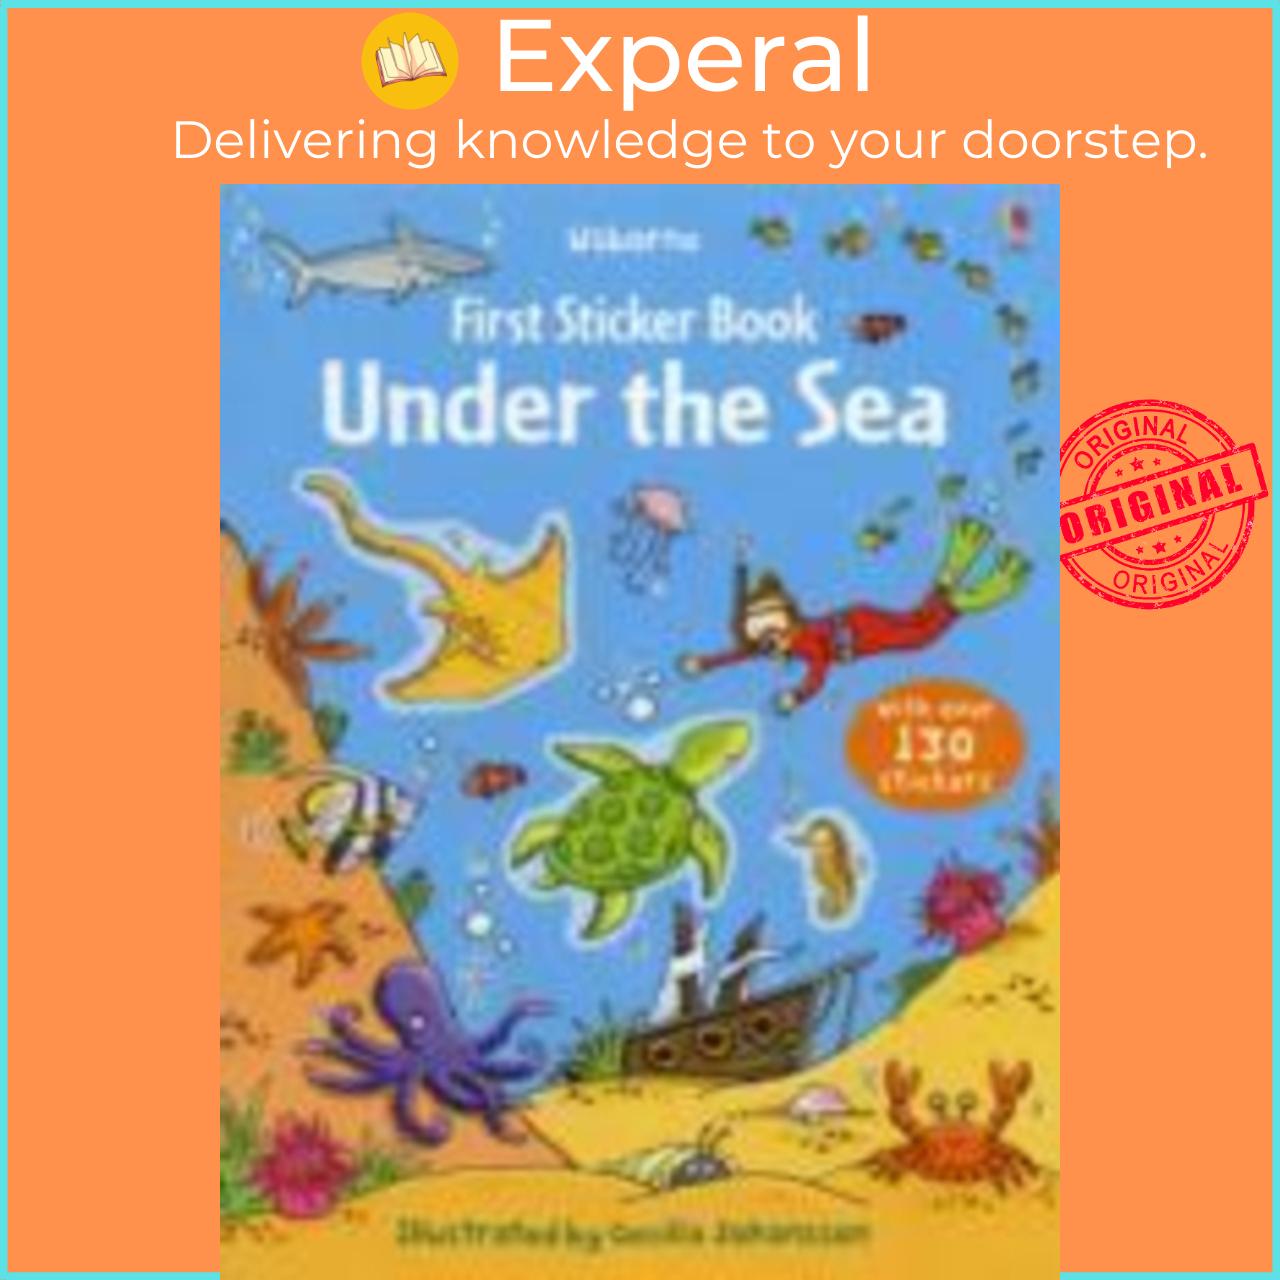 Hình ảnh Sách - First Sticker Book Under the Sea by Cecilia Johansson (UK edition, paperback)